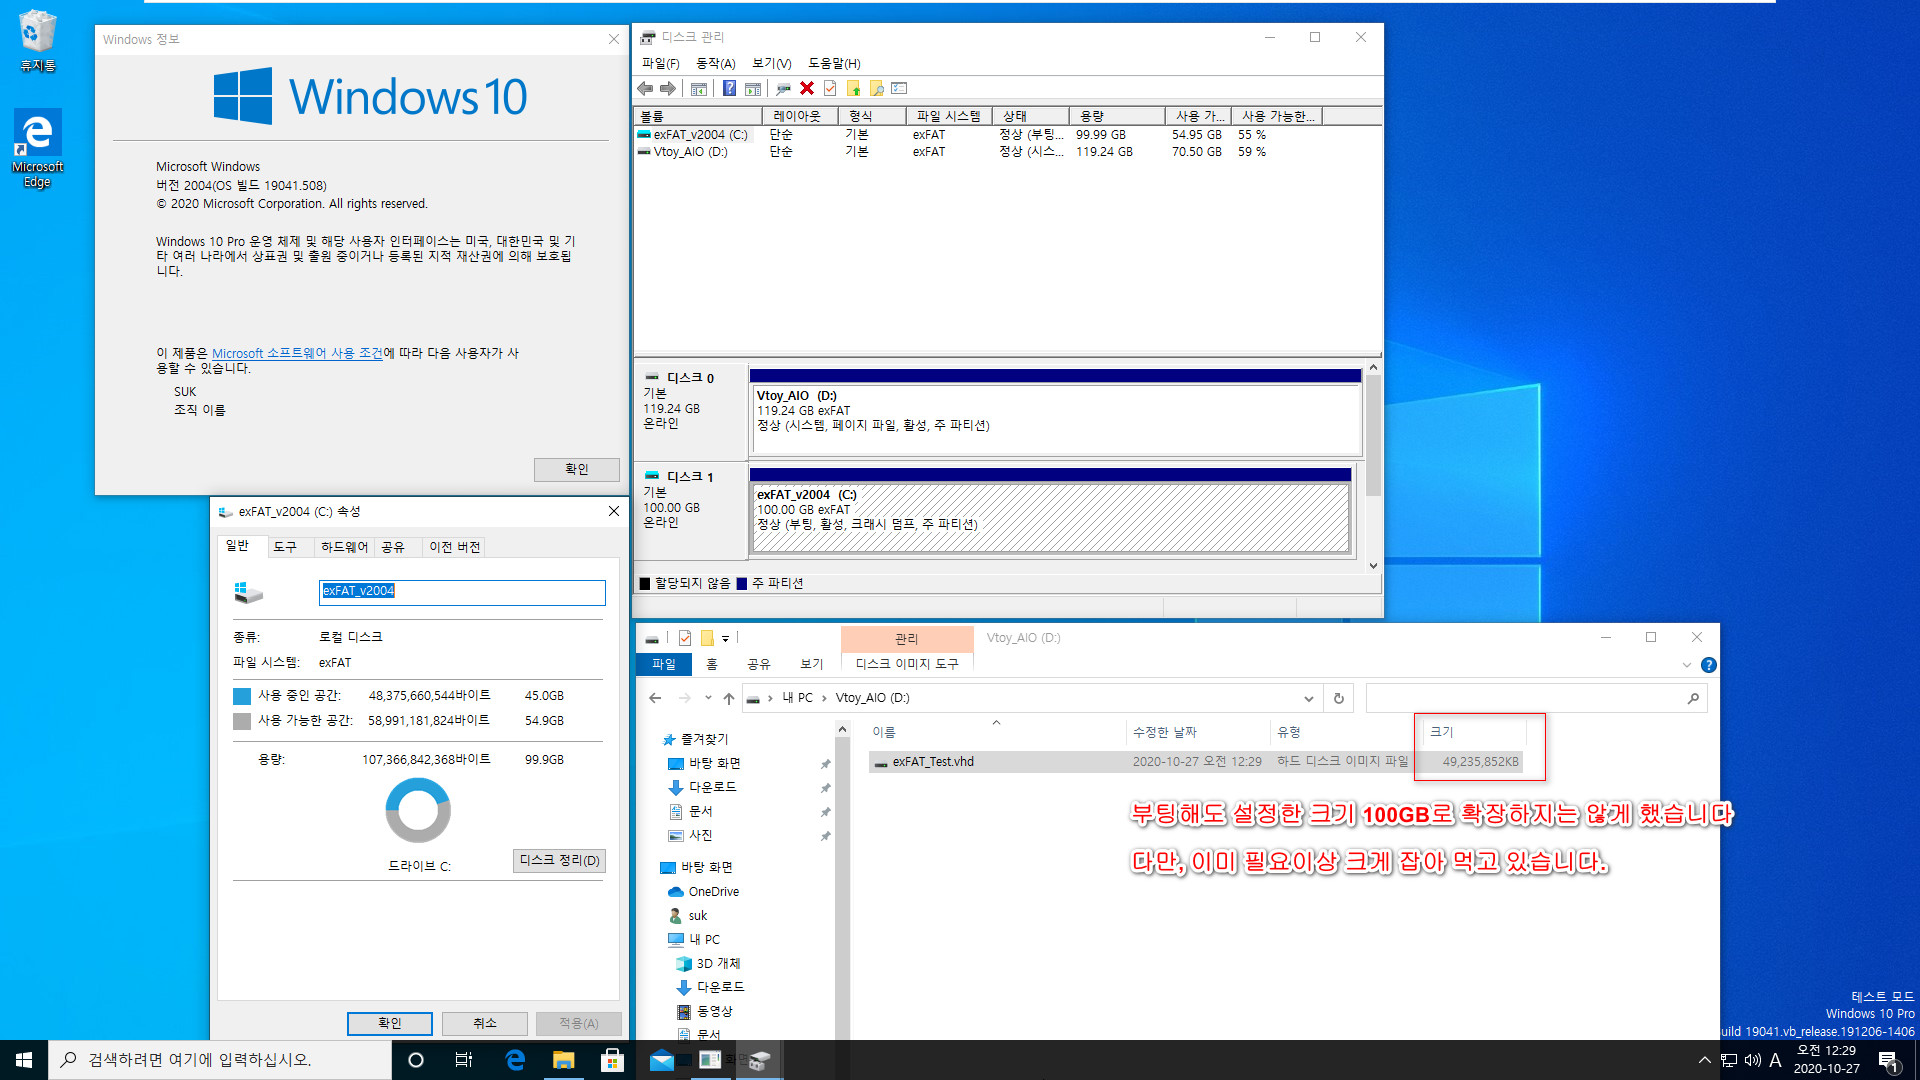 exFAT 포맷으로도 VHD 부팅이 Windows 10 버전 1903부터 된다고 하여 테스트 - 생고생만 하다가 컴퓨터 먹통 2번이나 되고 그만뒀습니다 2020-10-27_002953.jpg